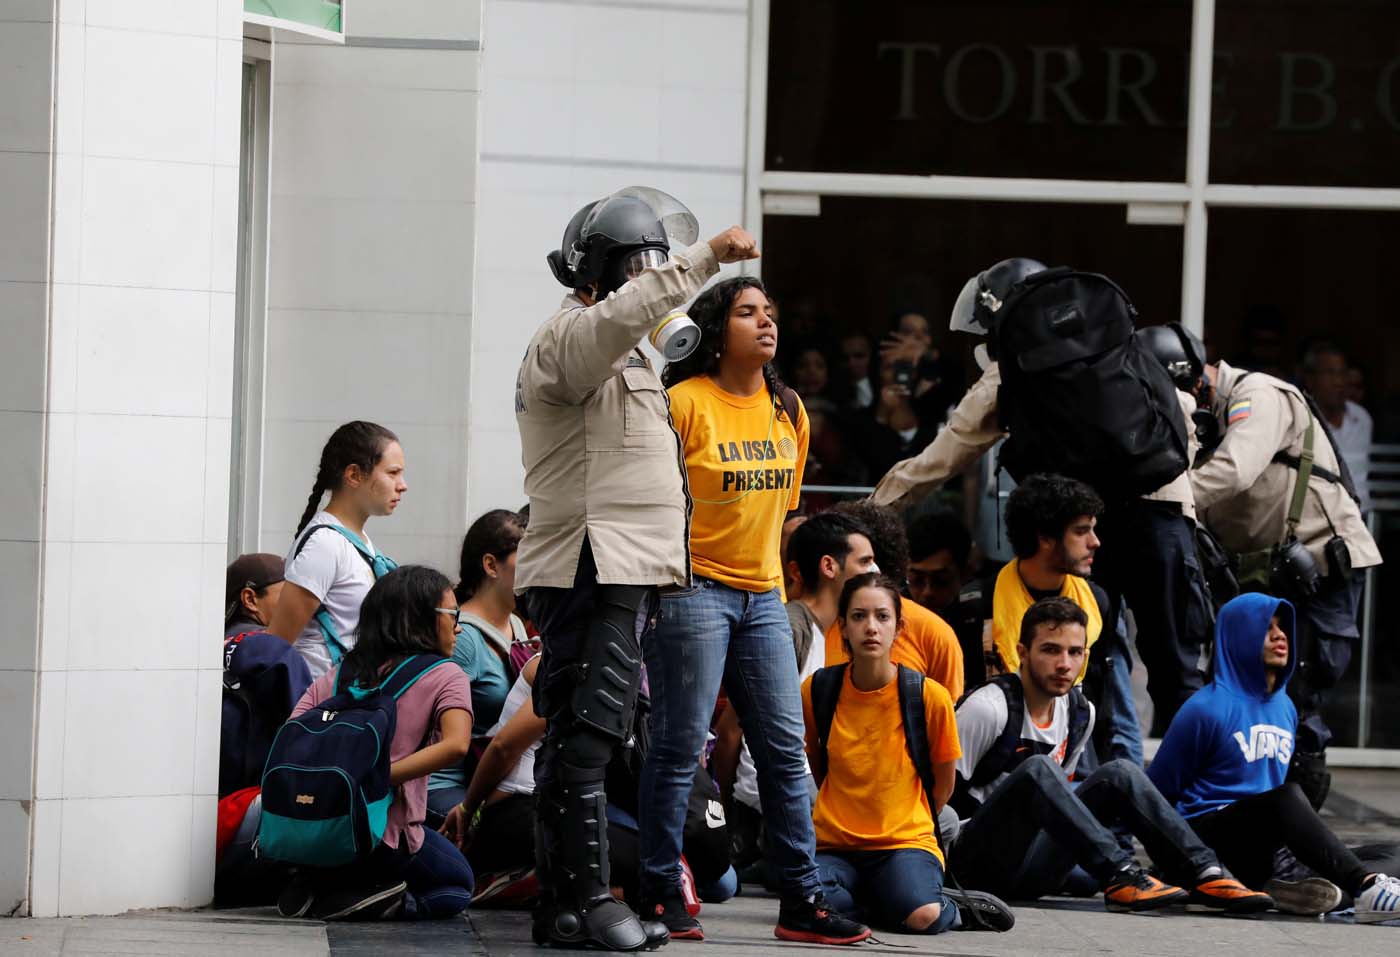 Police detain protesters during a rally against Venezuela's President Nicolas Maduro's government in Caracas, Venezuela June 29, 2017. REUTERS/Carlos Garcia Rawlins